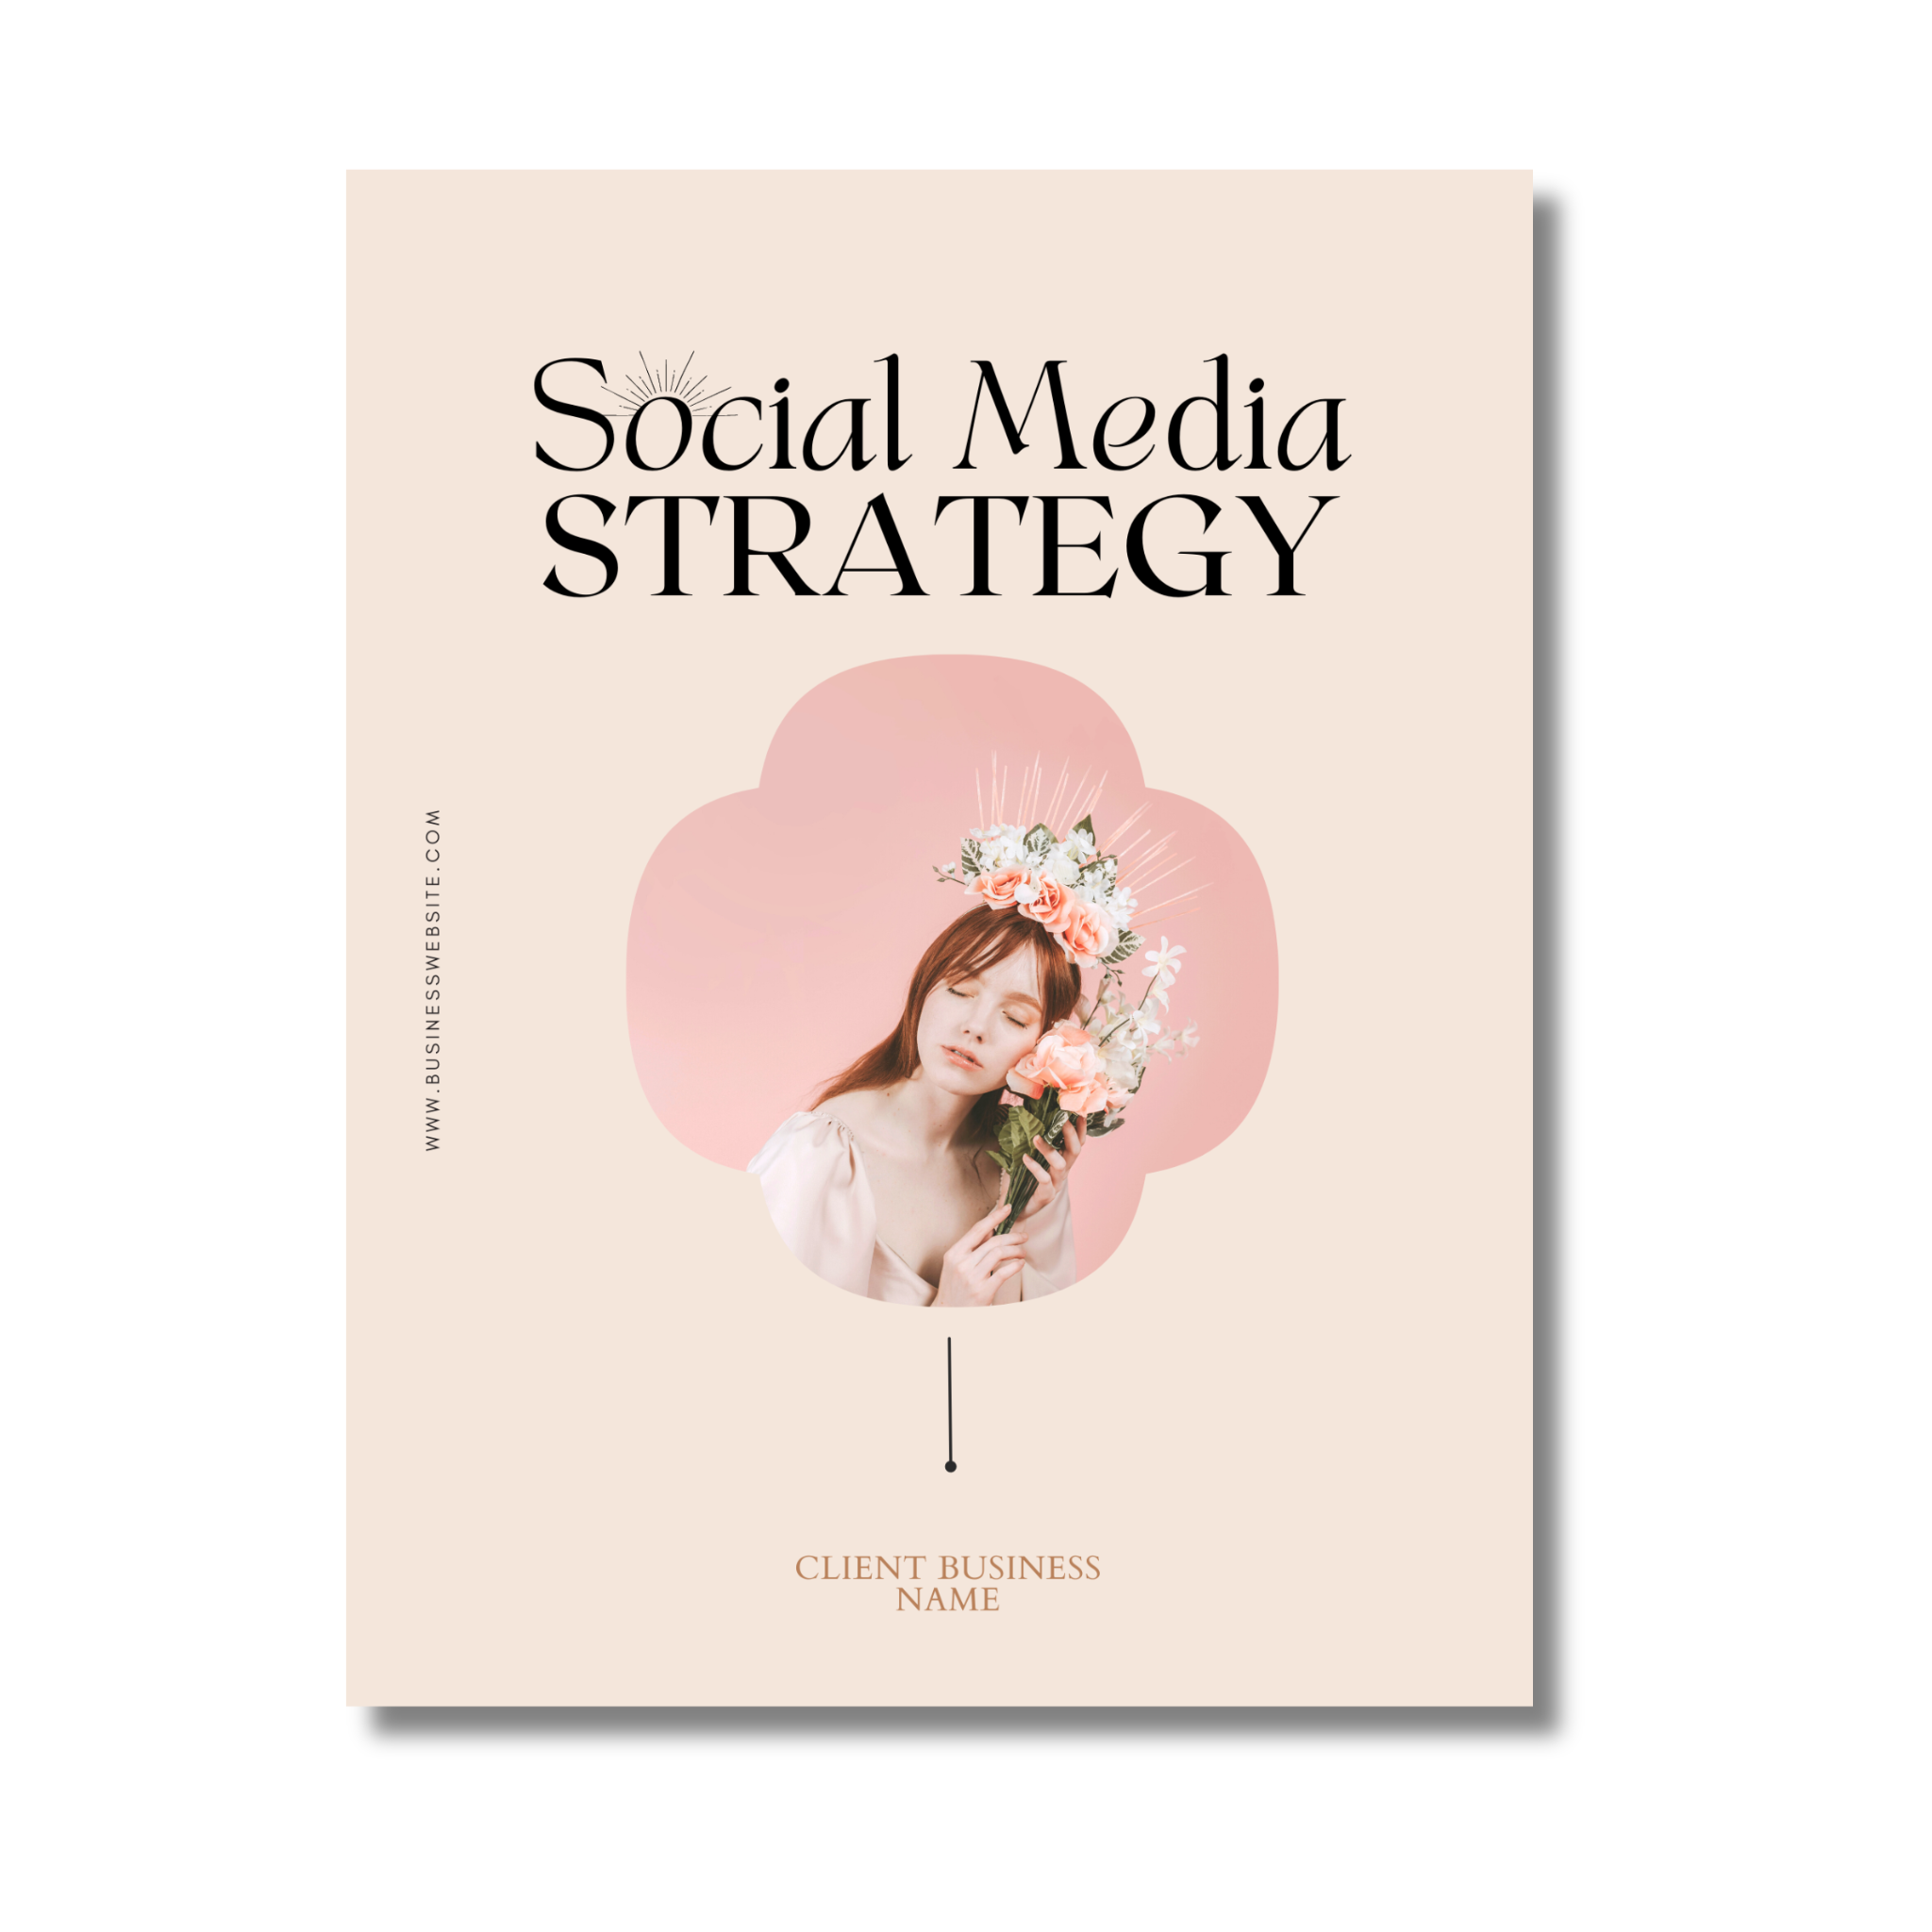 Social Media Strategy Template - Delicate & Dreamy